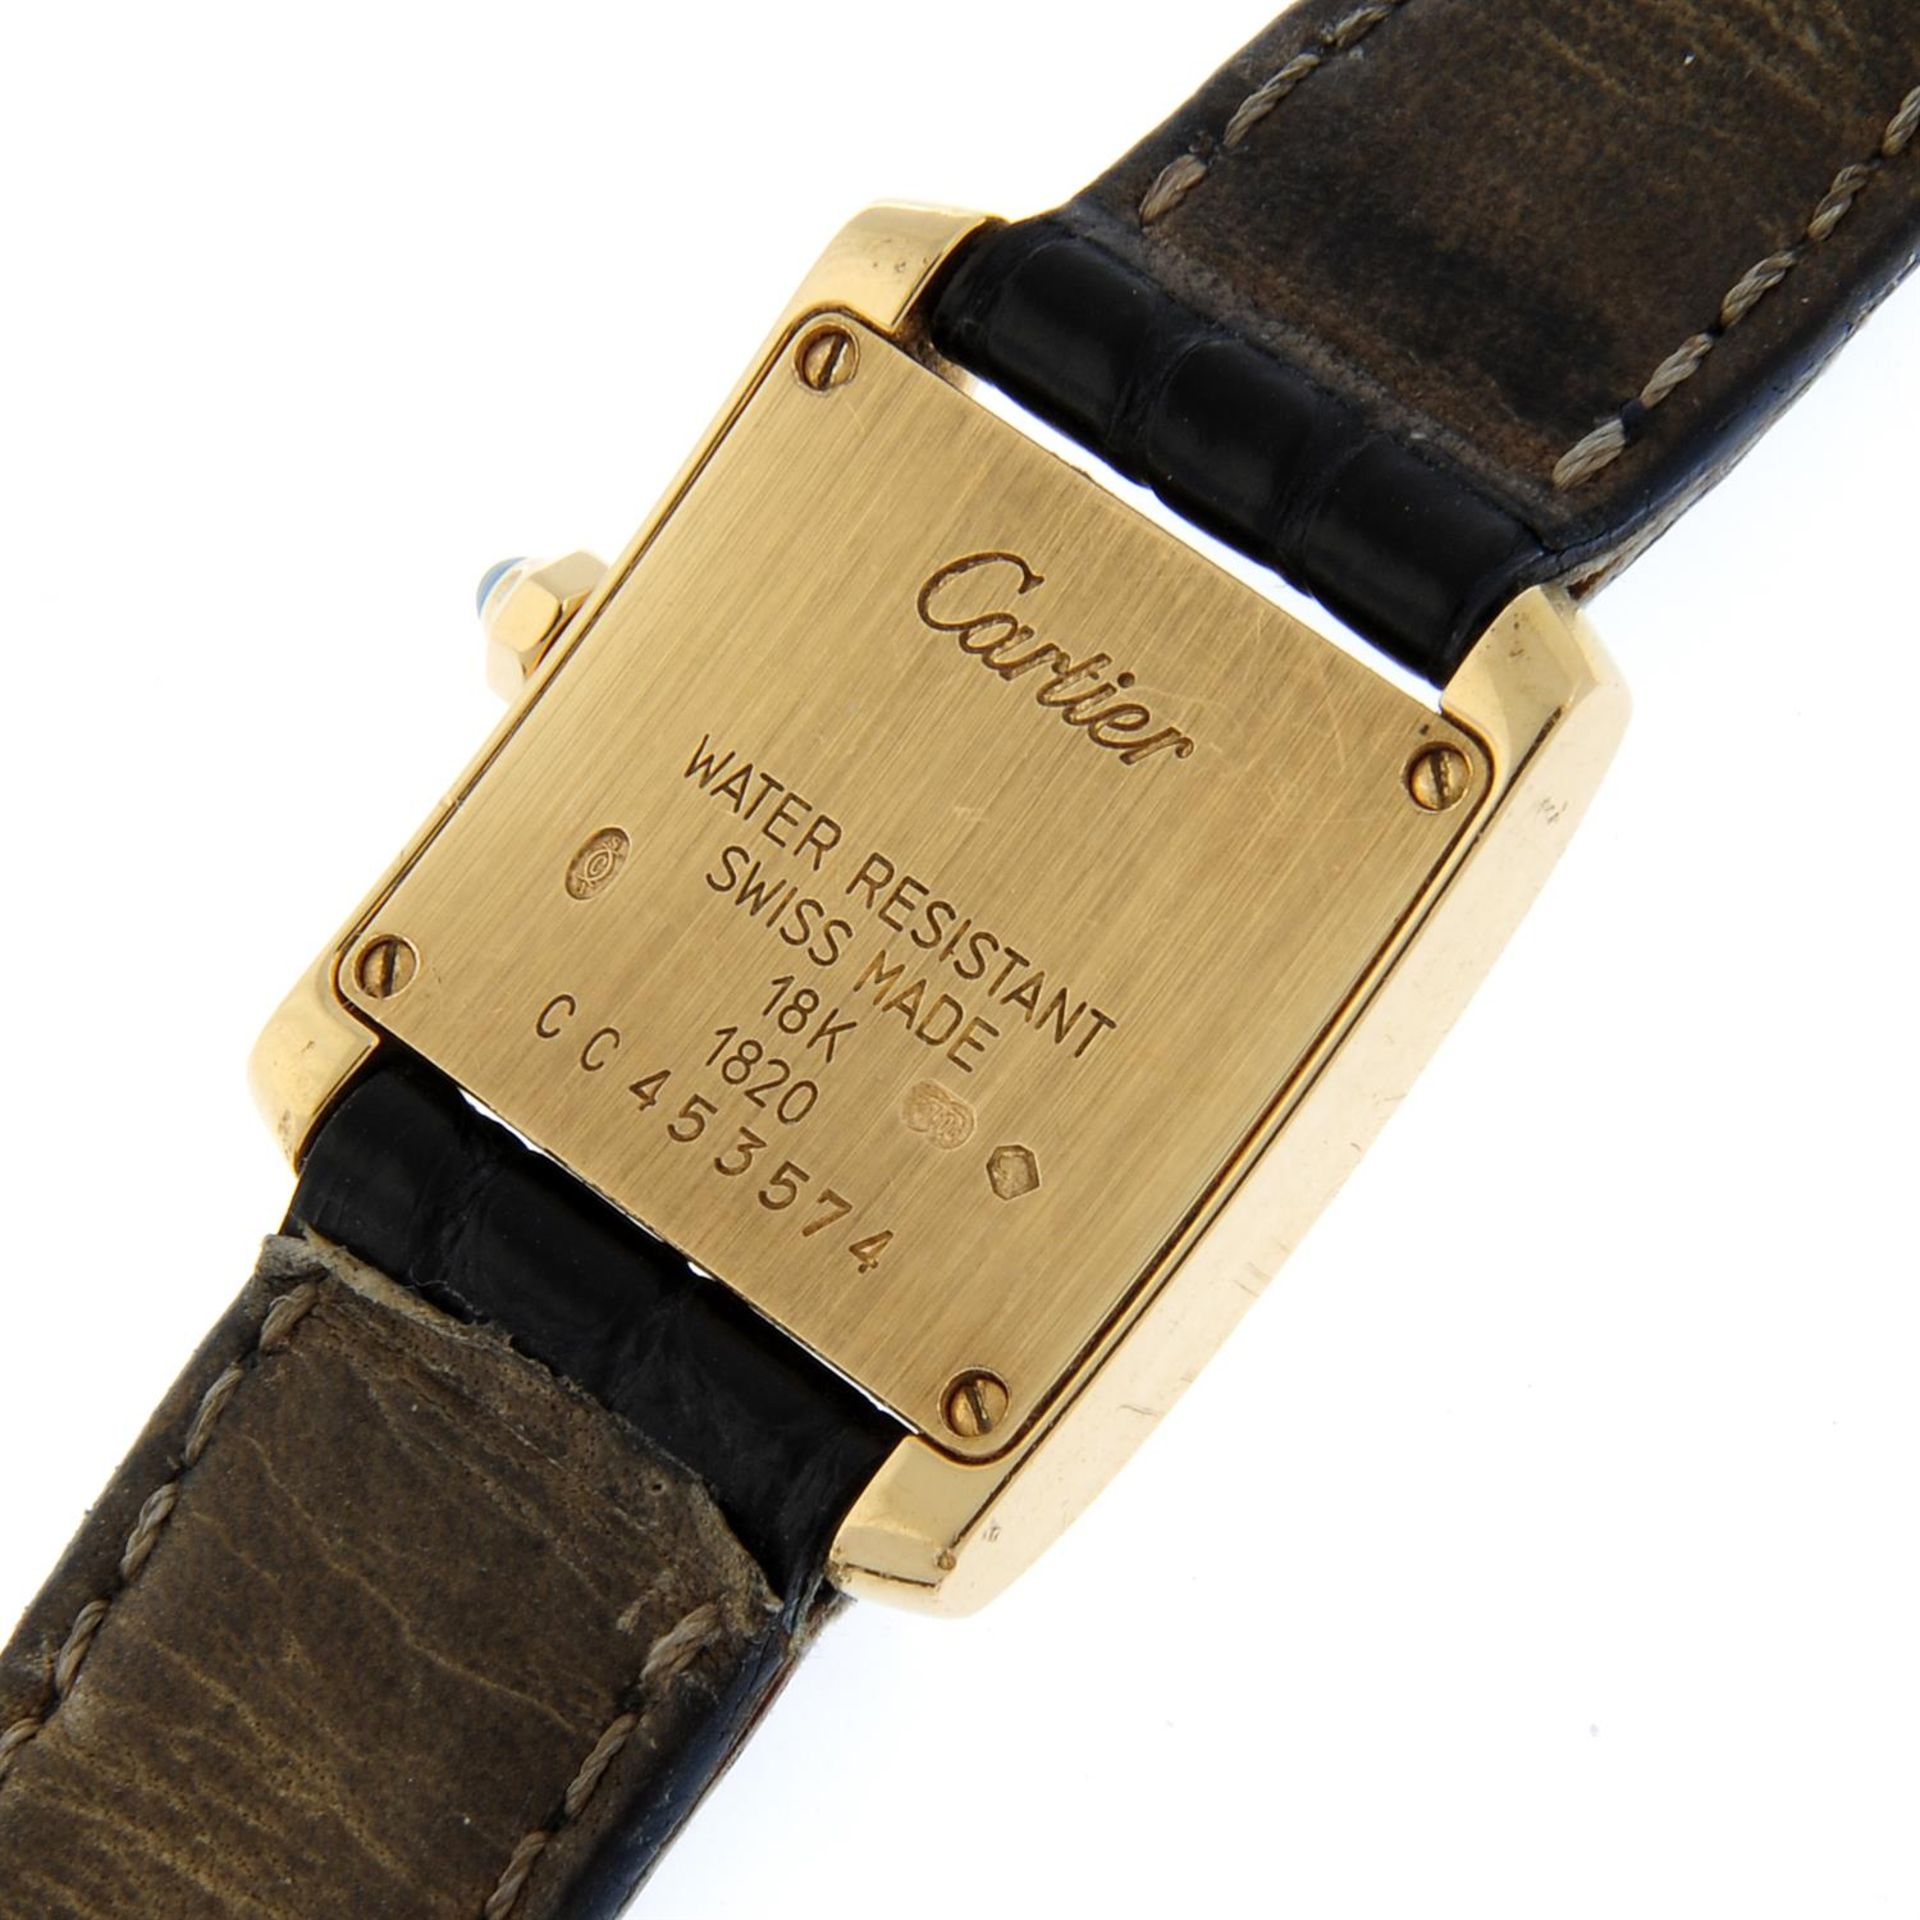 CARTIER - a yellow metal Tank Française wrist watch, 20mm. - Image 4 of 5